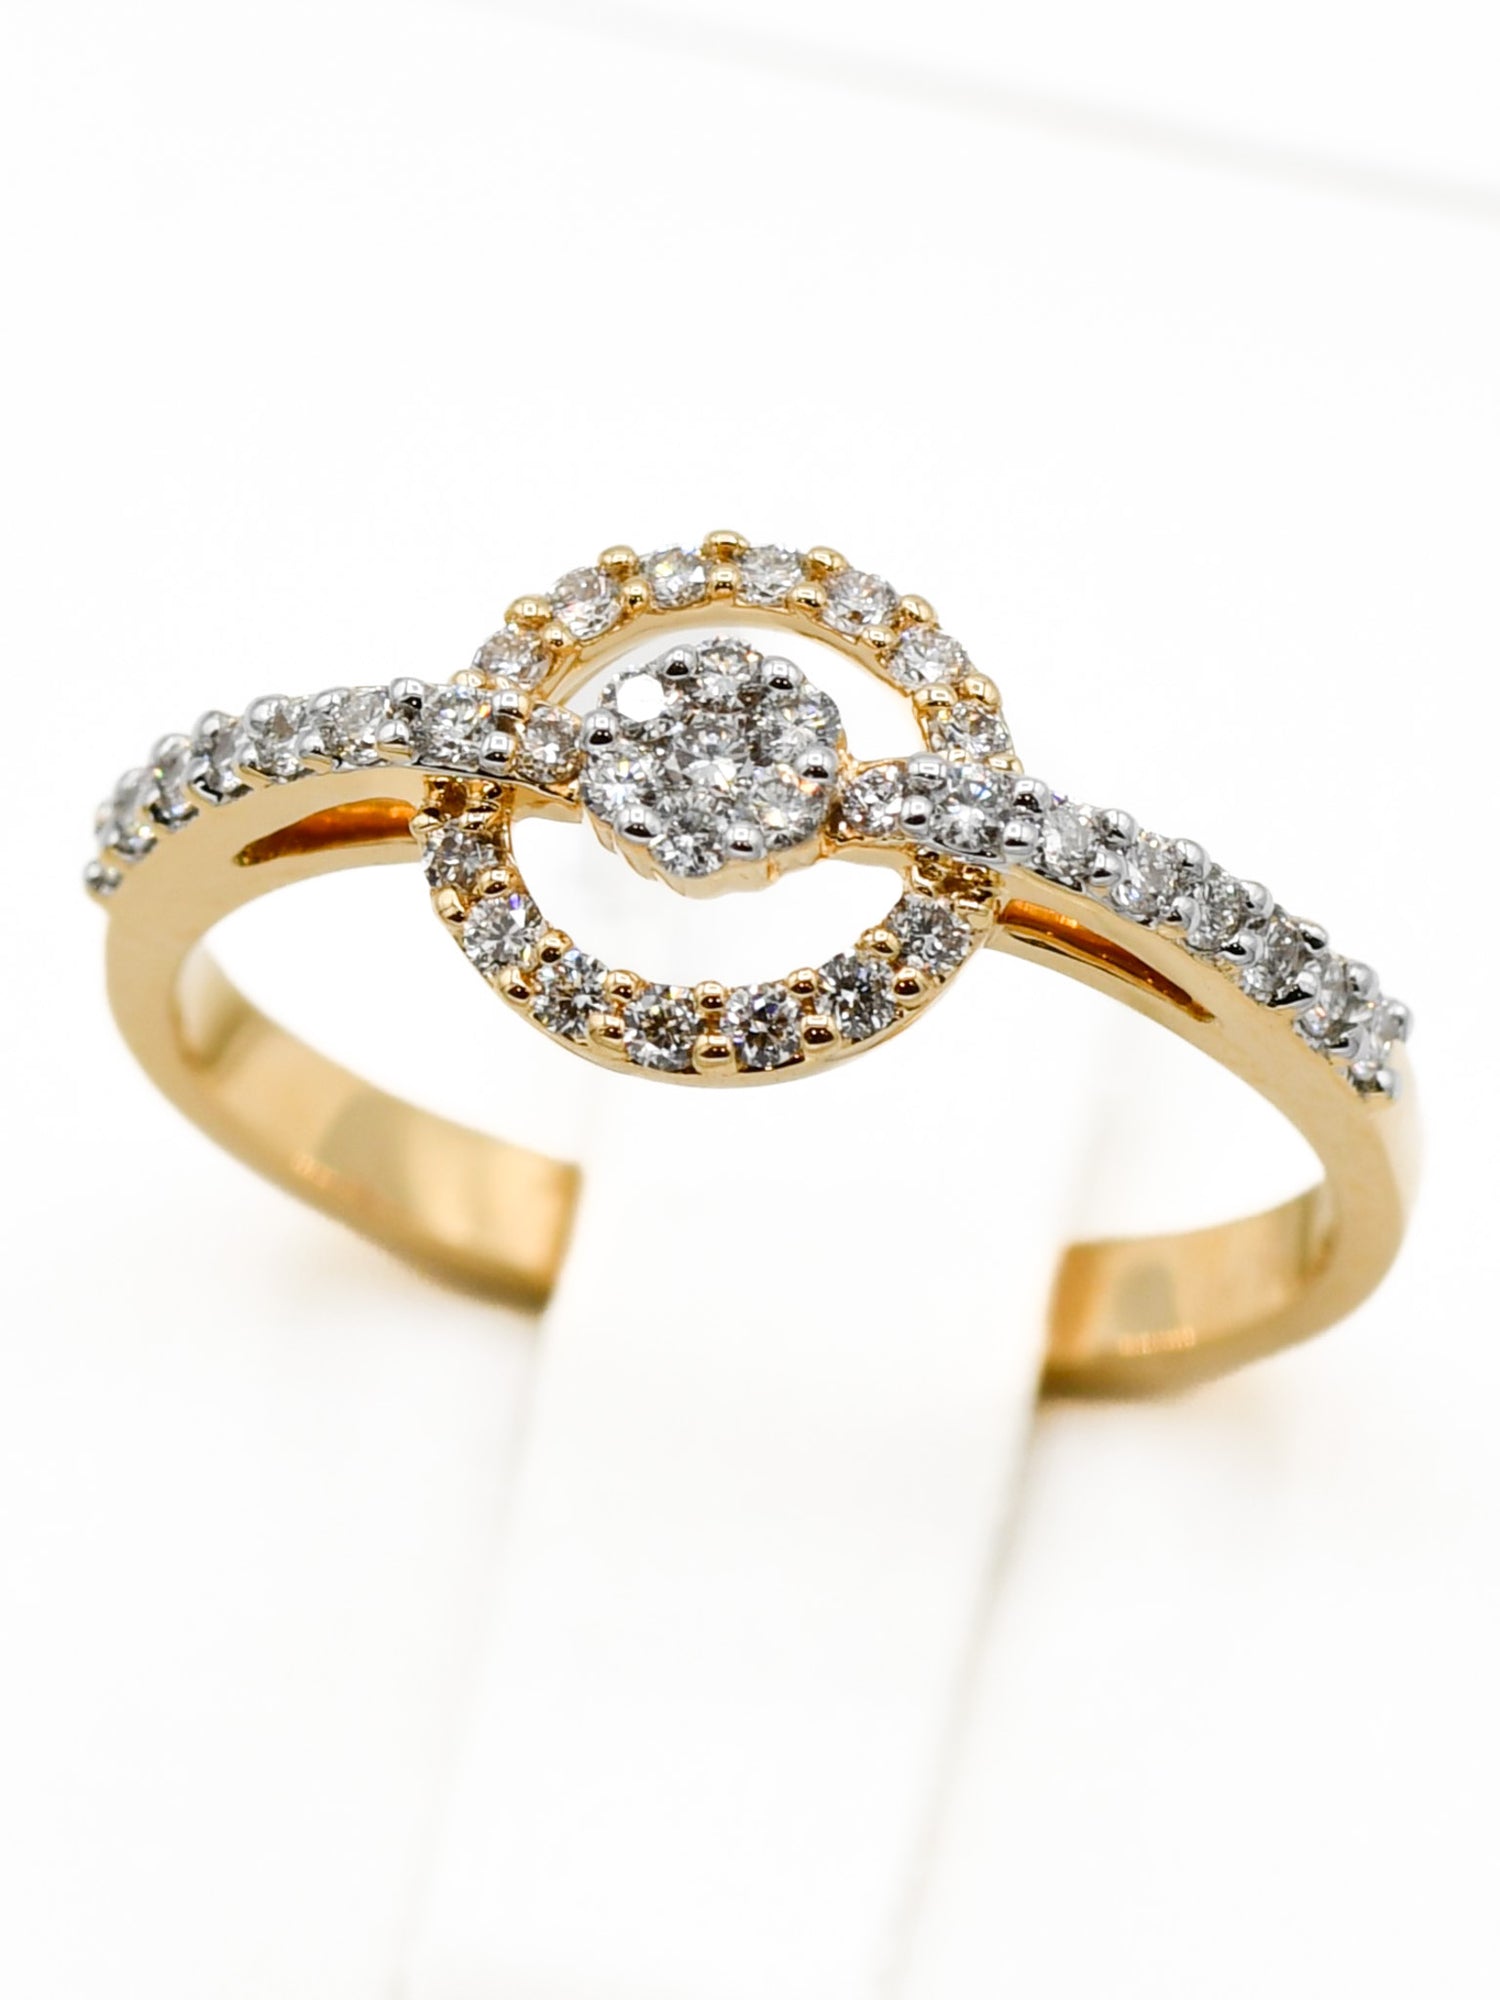 18ct Gold 0.32ct Diamond Ladies Ring - Roop Darshan